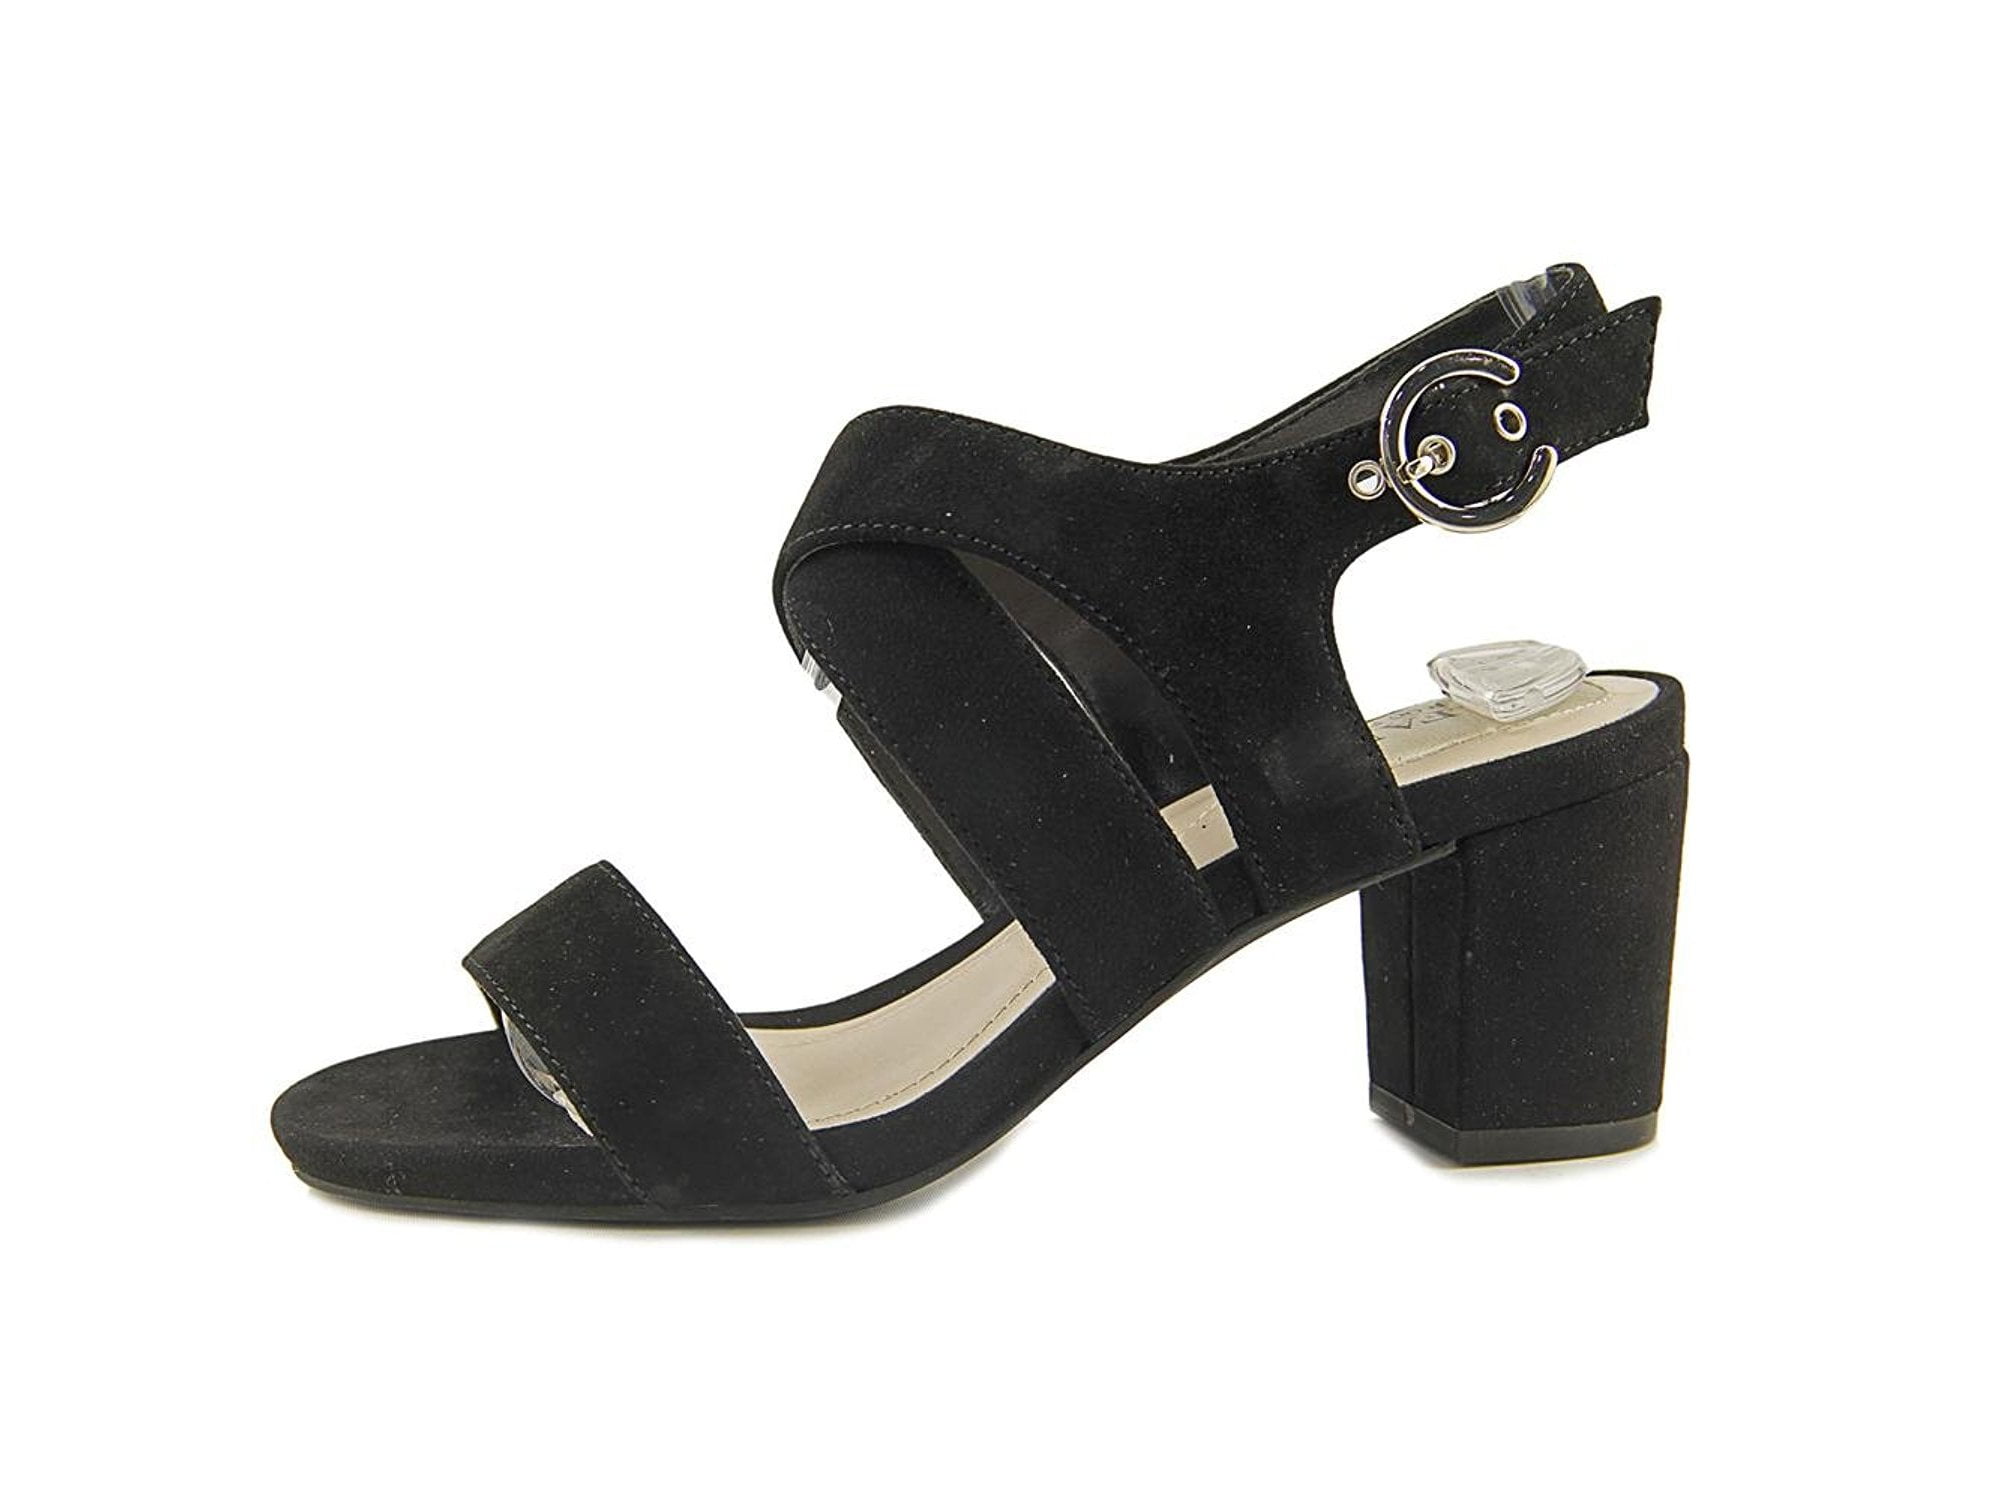 alfani black sandals